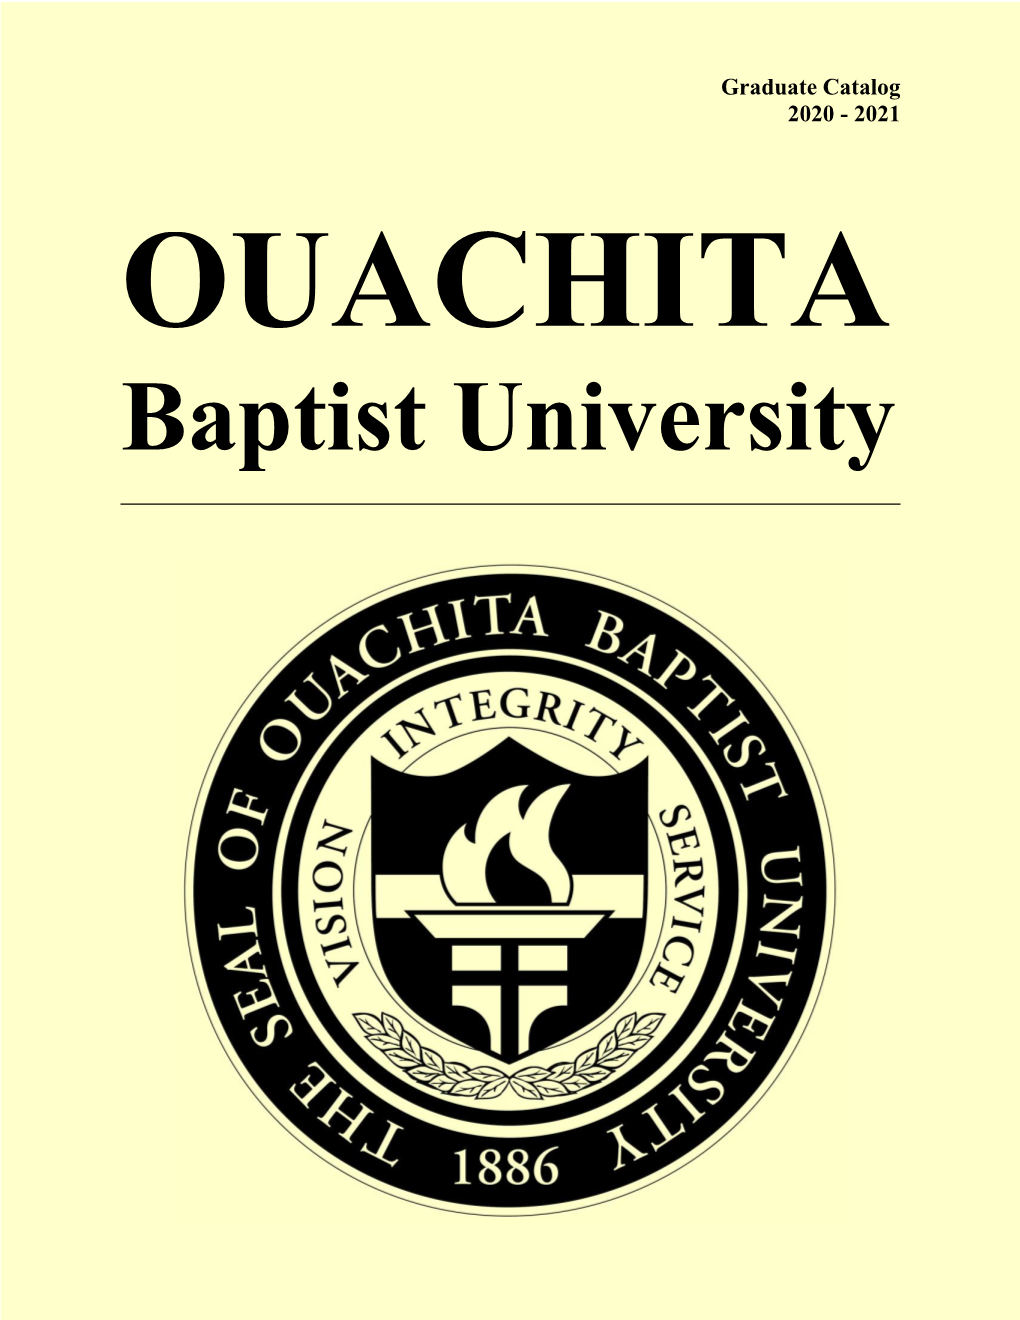 Ouachita Baptist University GRADUATE CATALOG